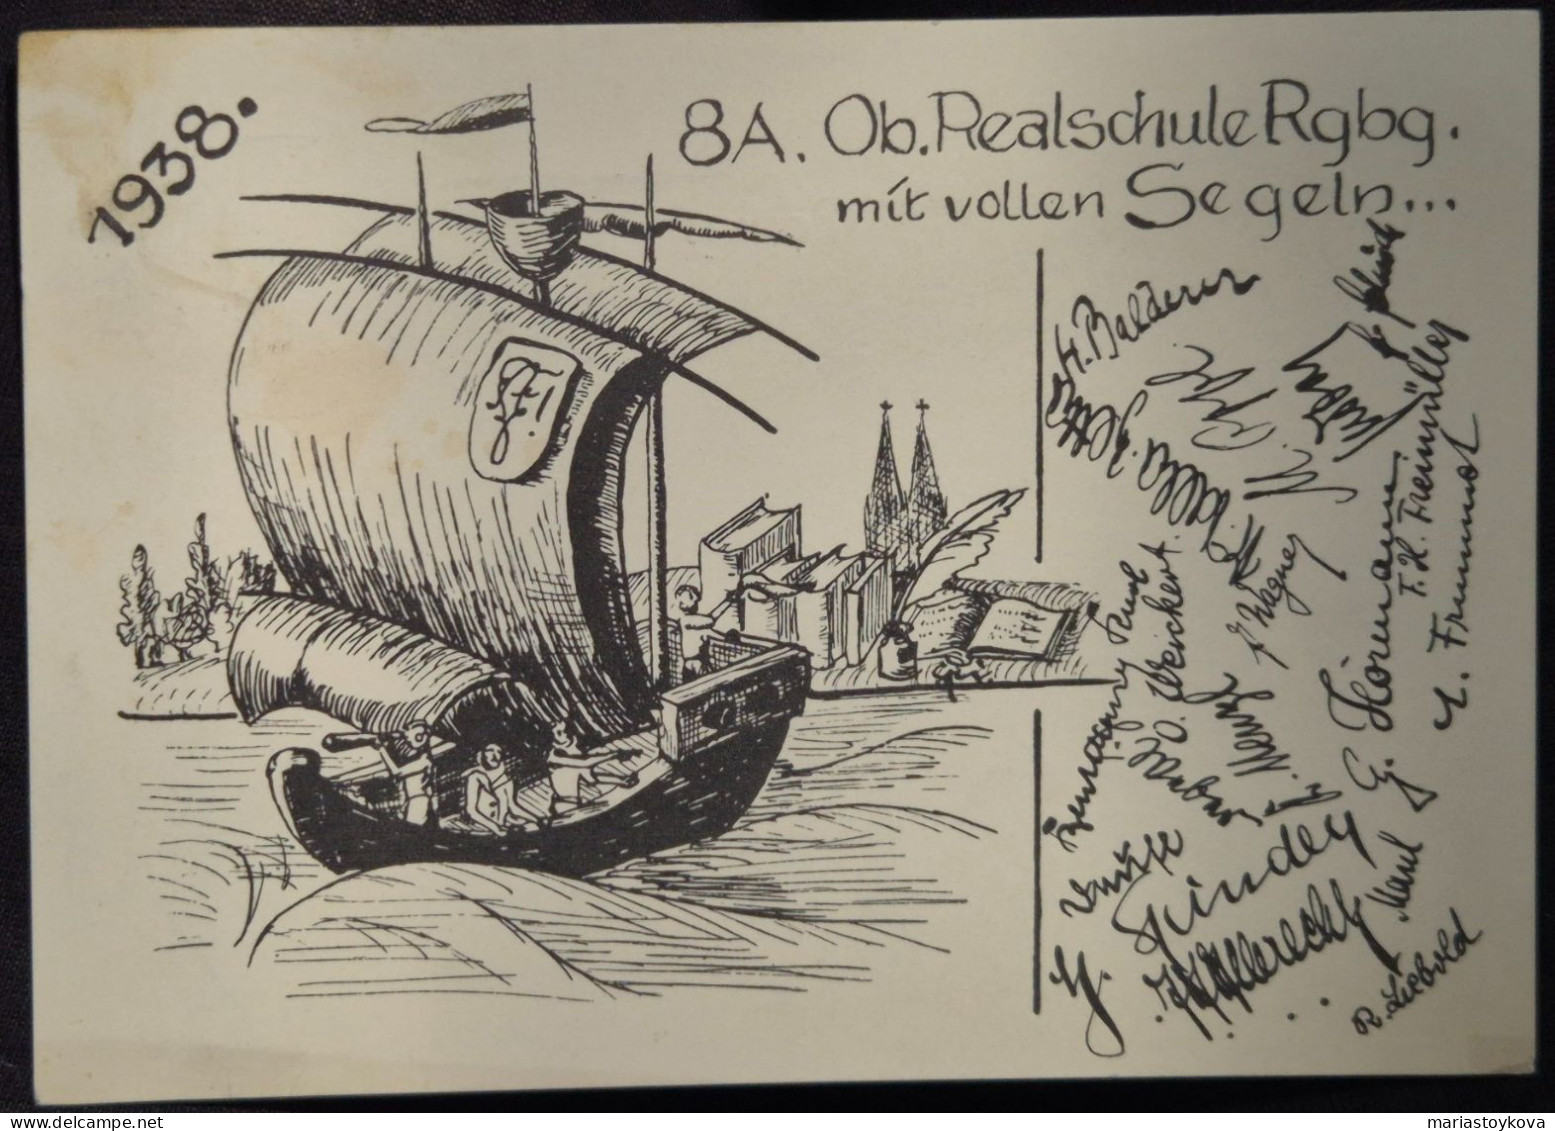 1938. Realschule Regensburg. Autogramme 8A - Regensburg